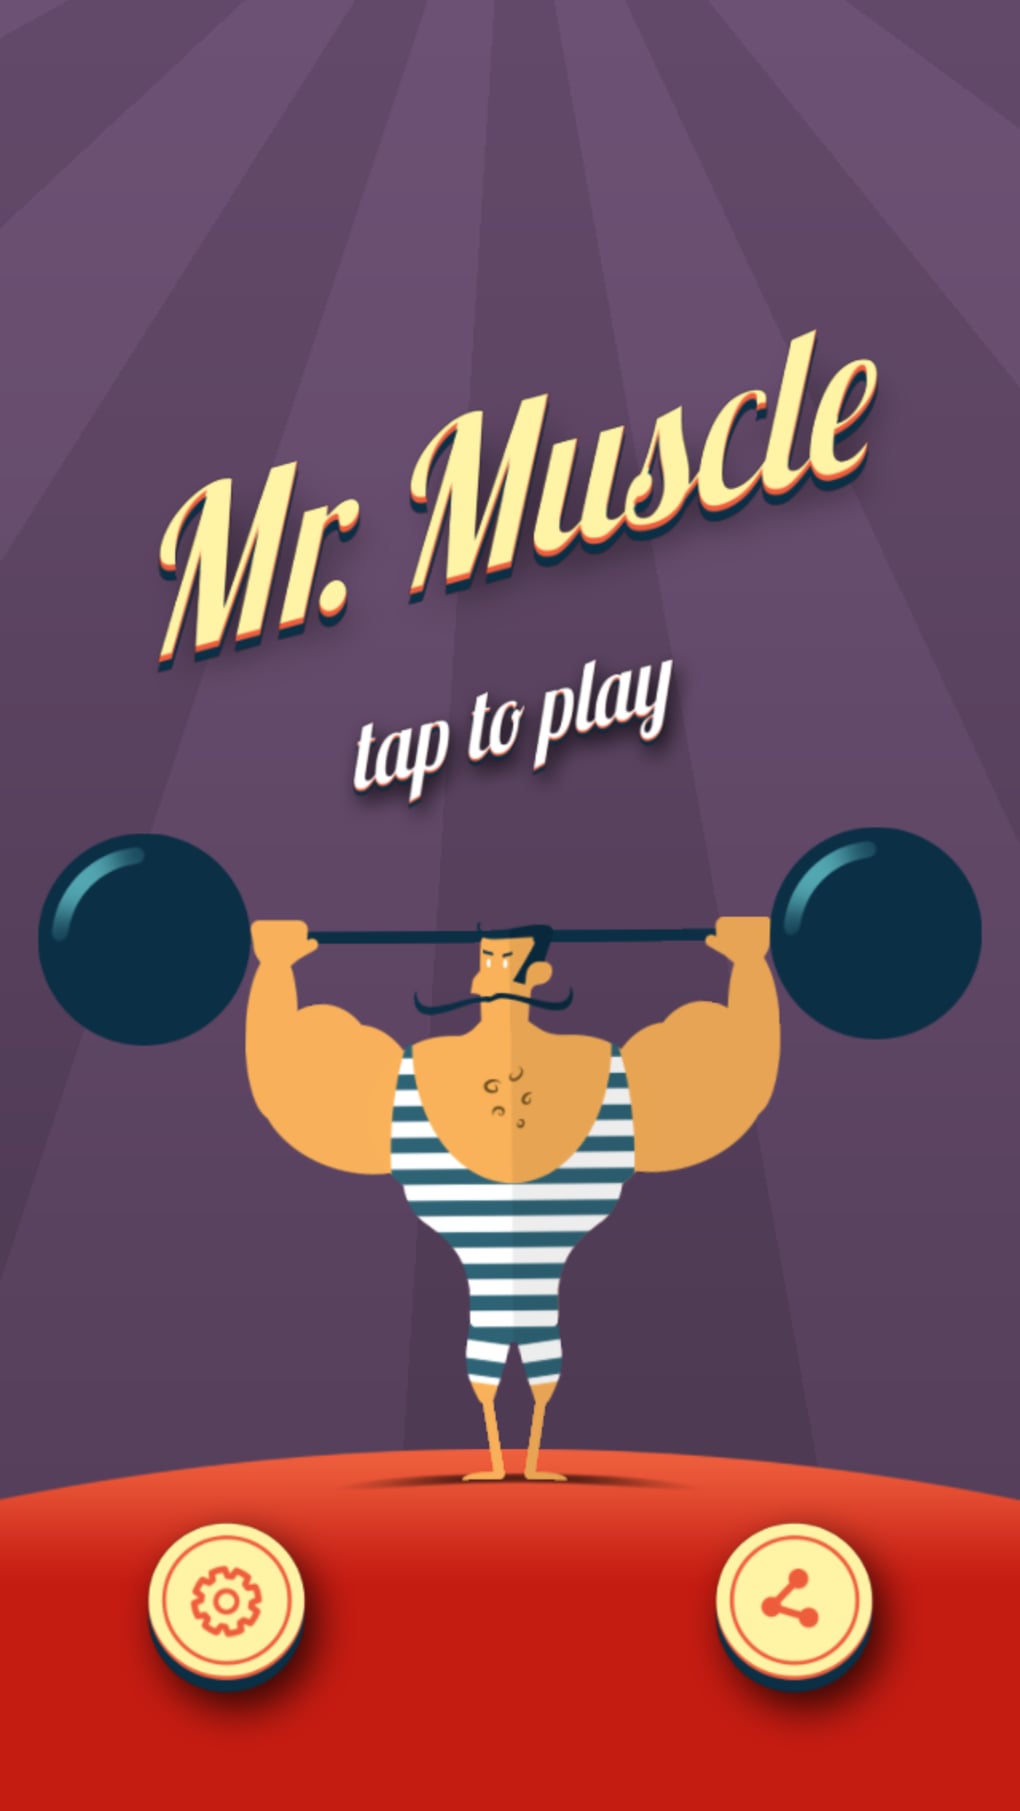 Mr. Muscle для iPhone — Скачать